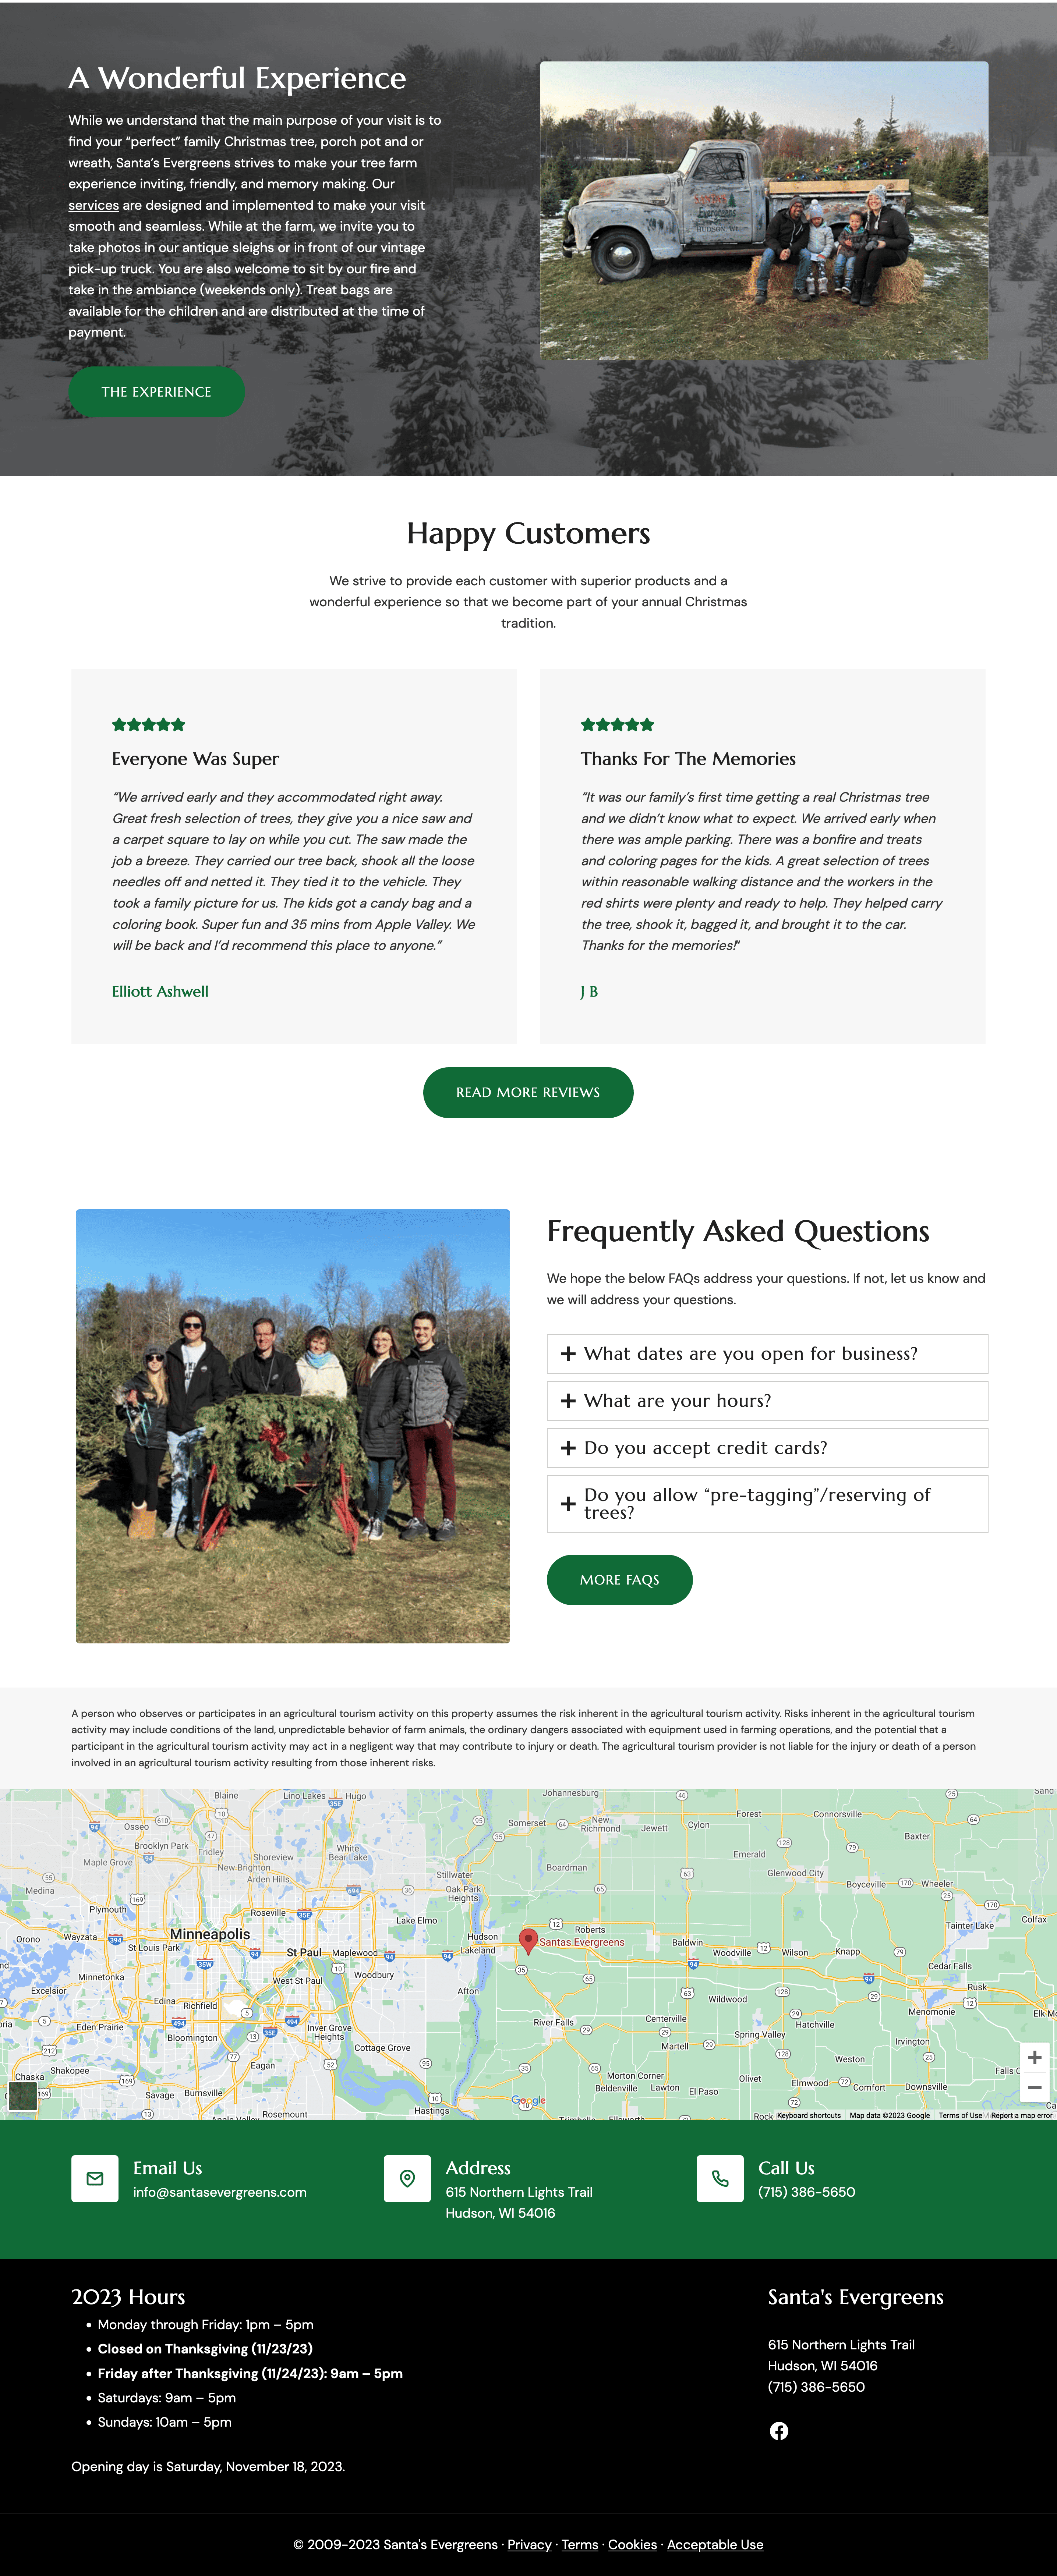 Santa's Evergreens home page bottom